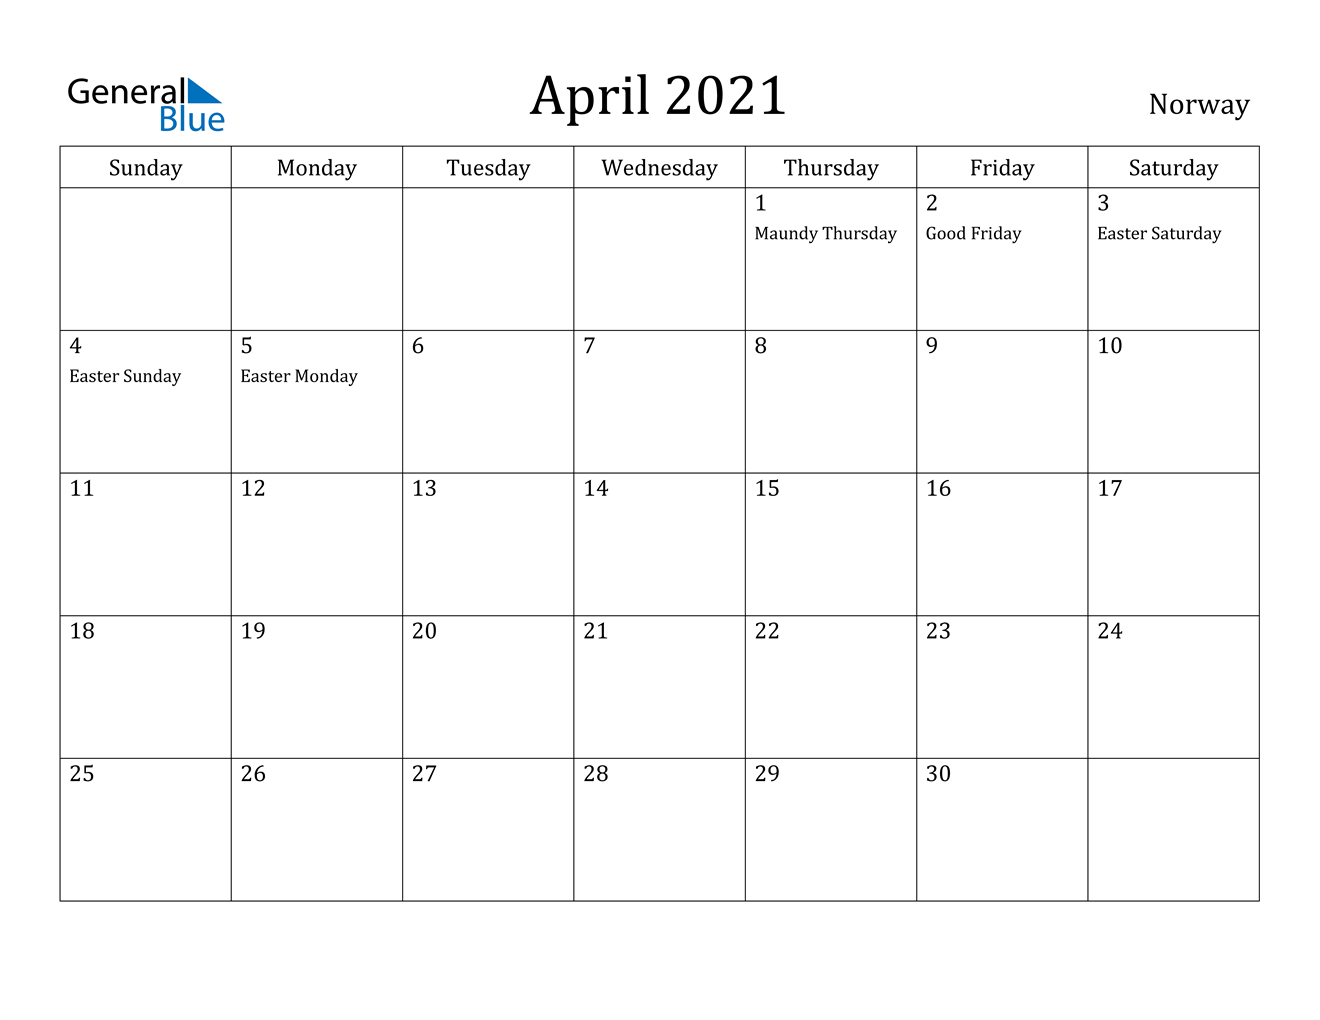 April 2021 Calendar - Norway